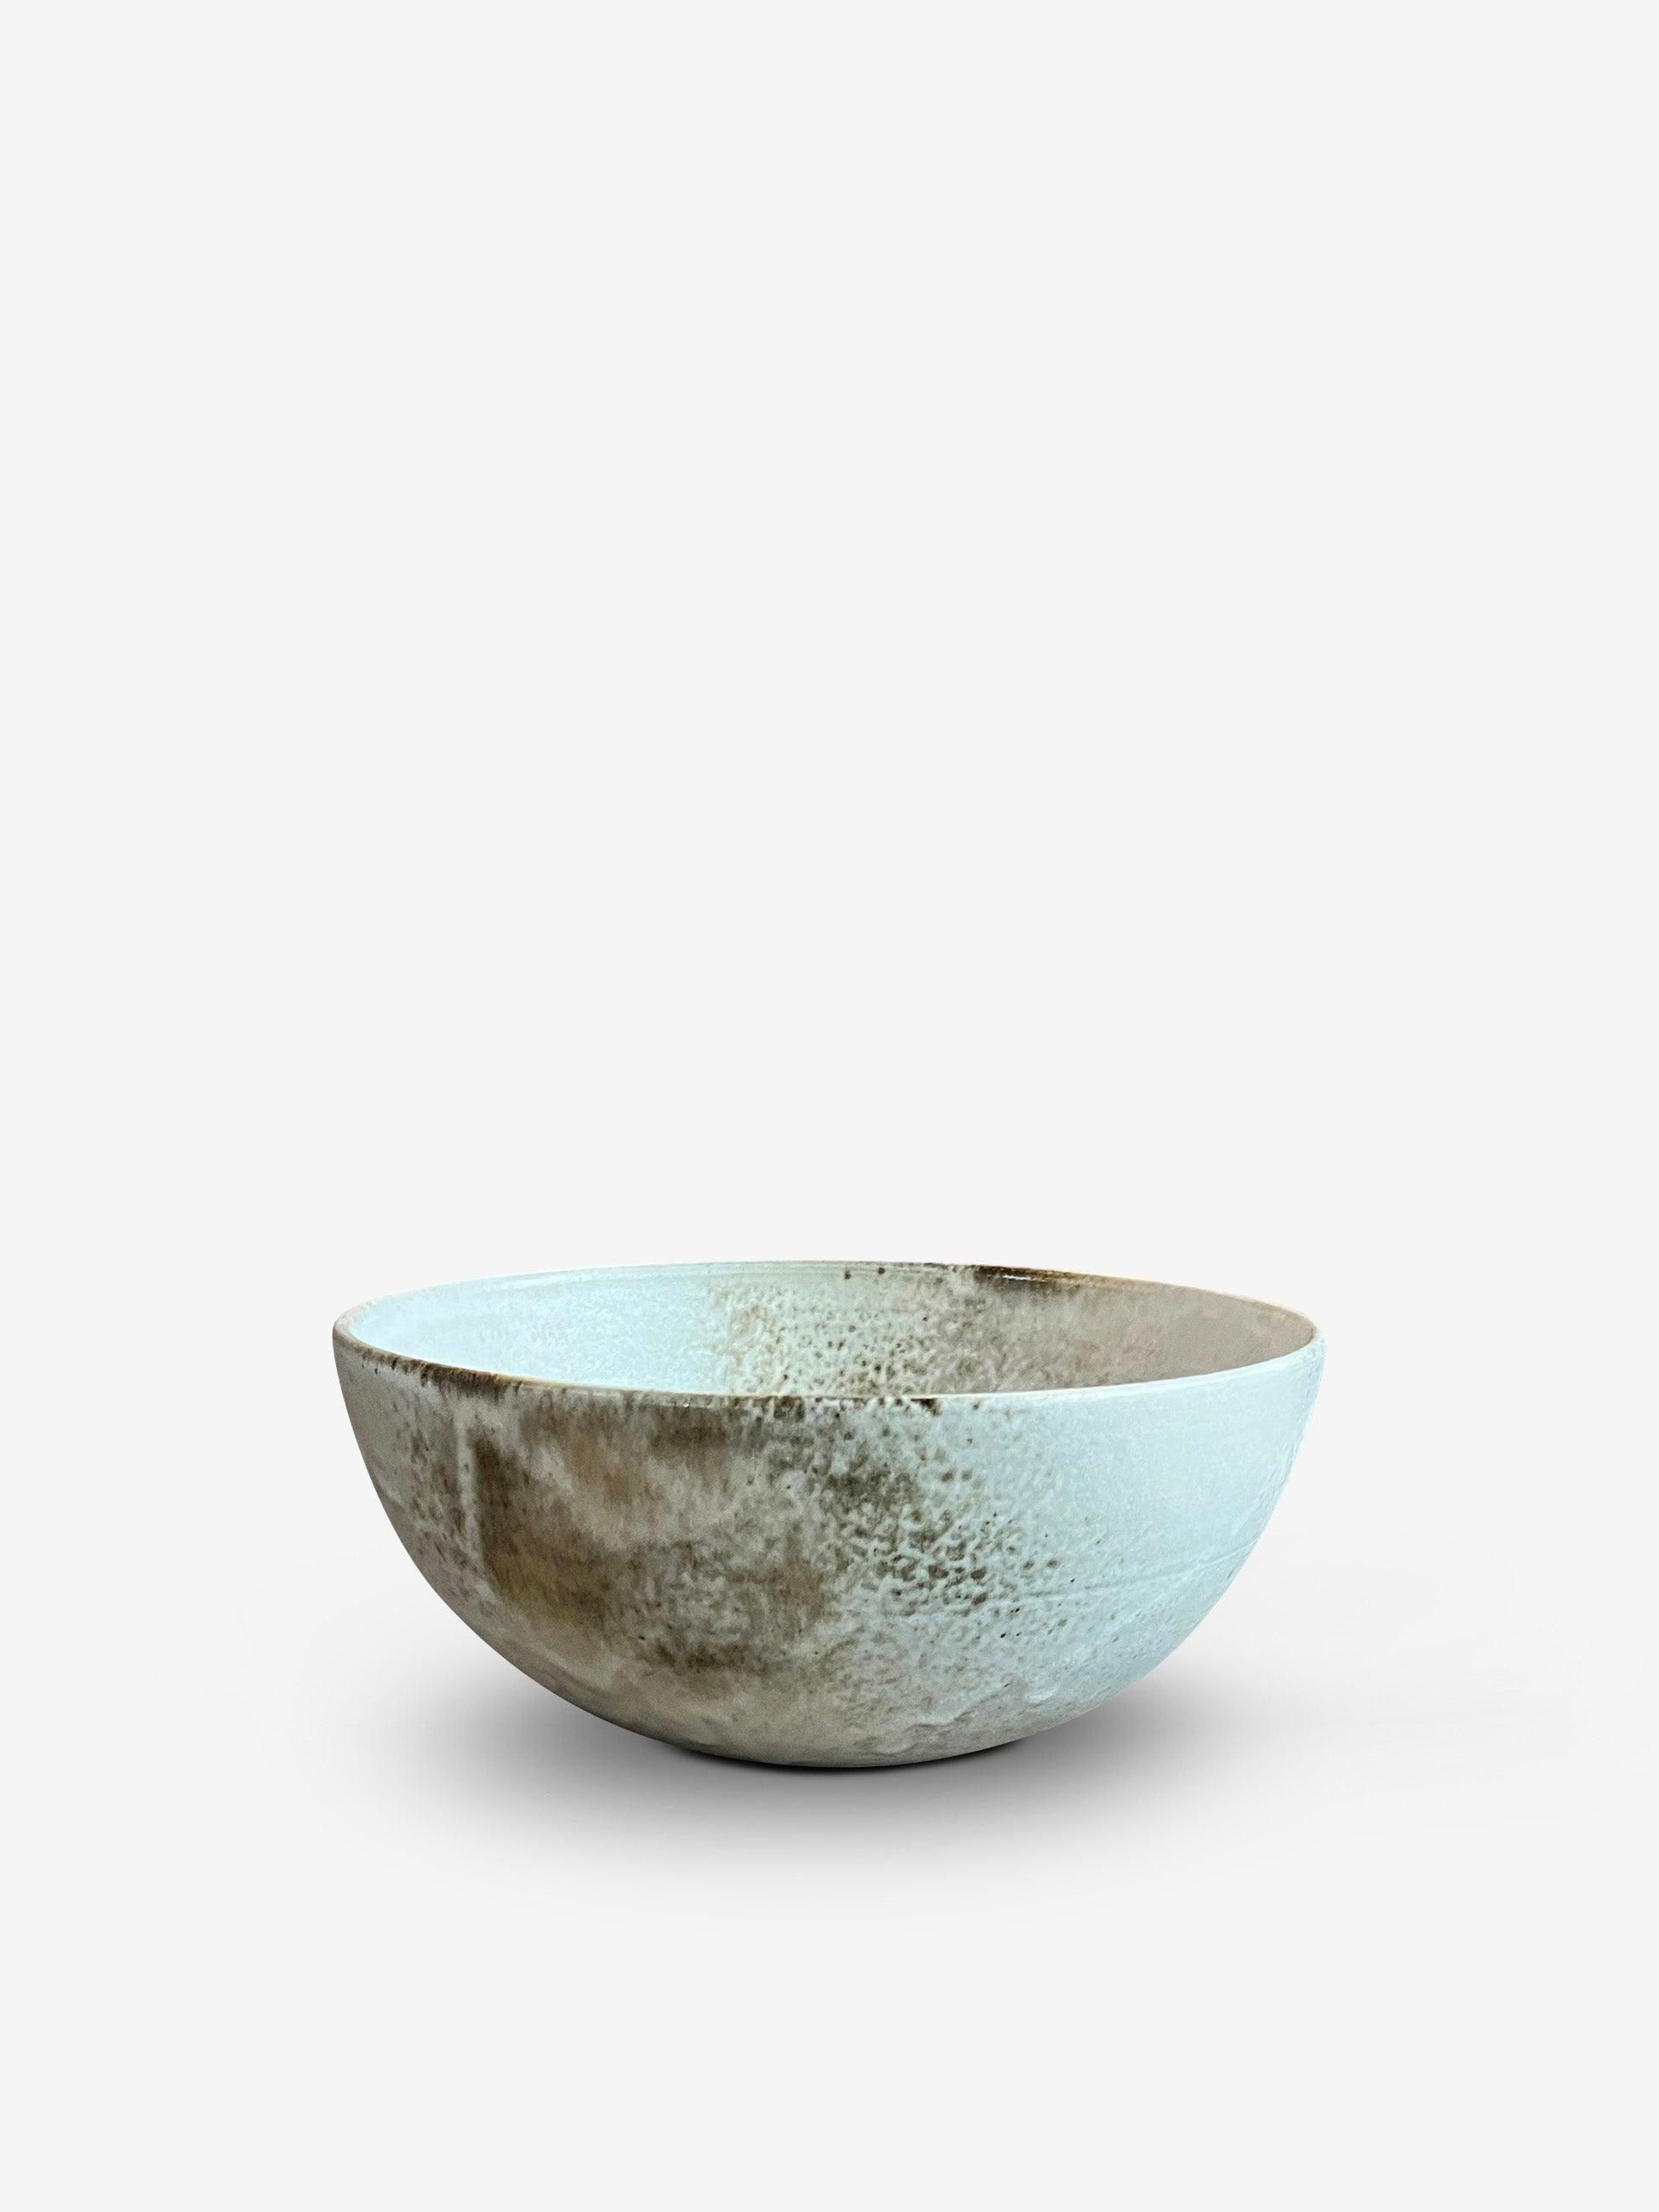 Ceramic Extra Large Serving Bowl by KH Wurtz